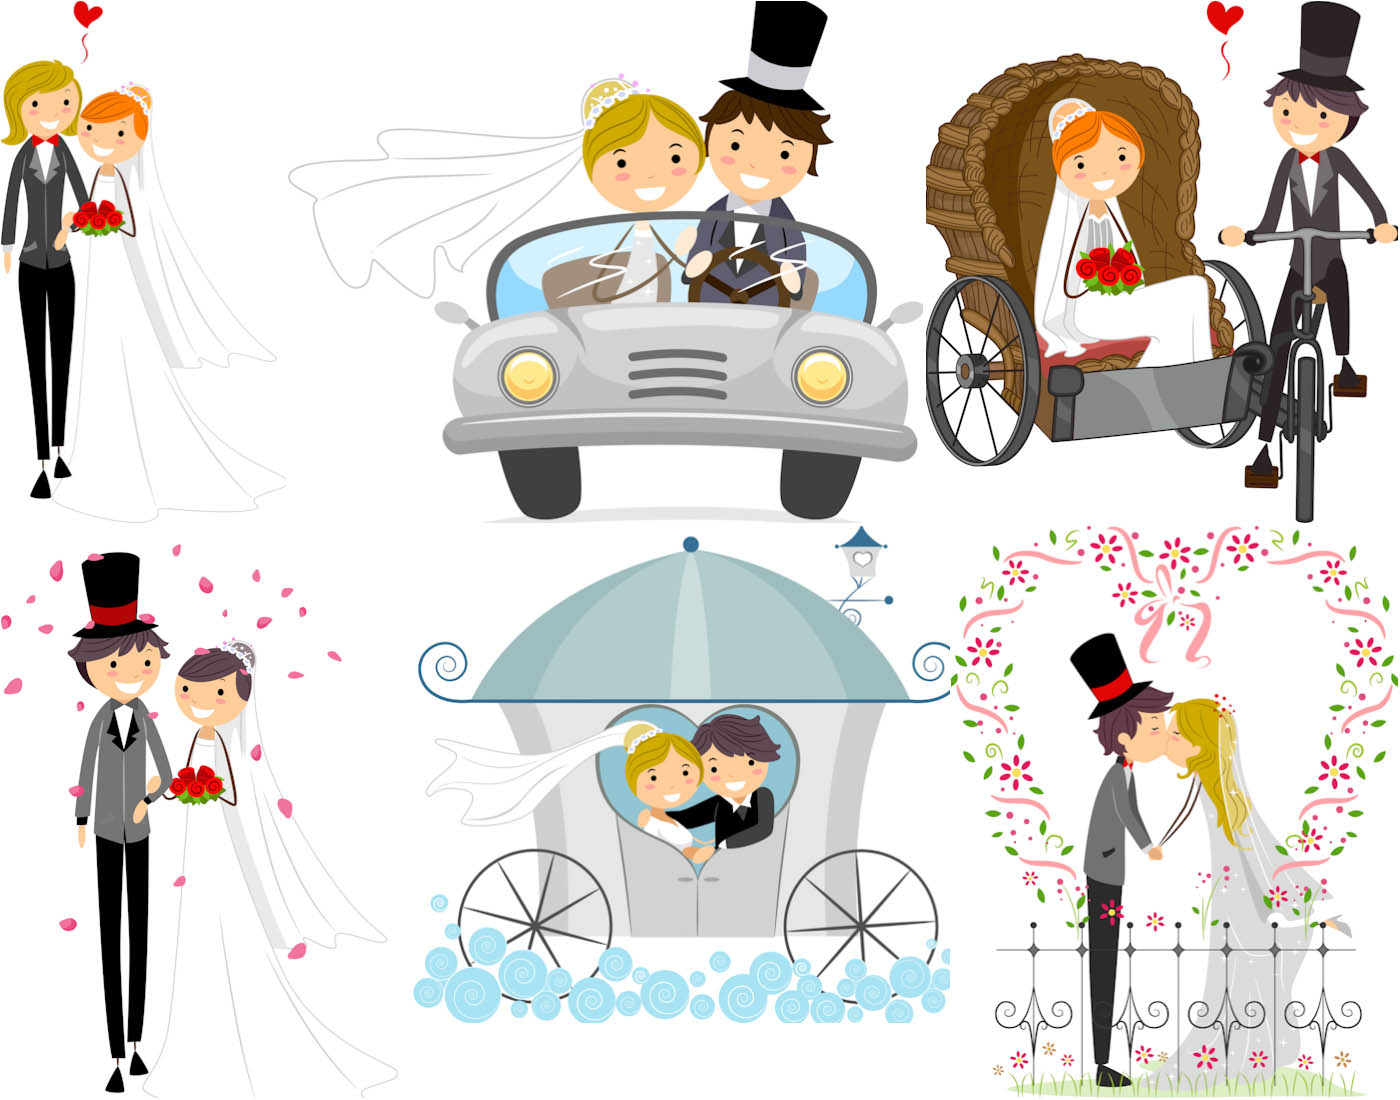 free vector clipart wedding - photo #11